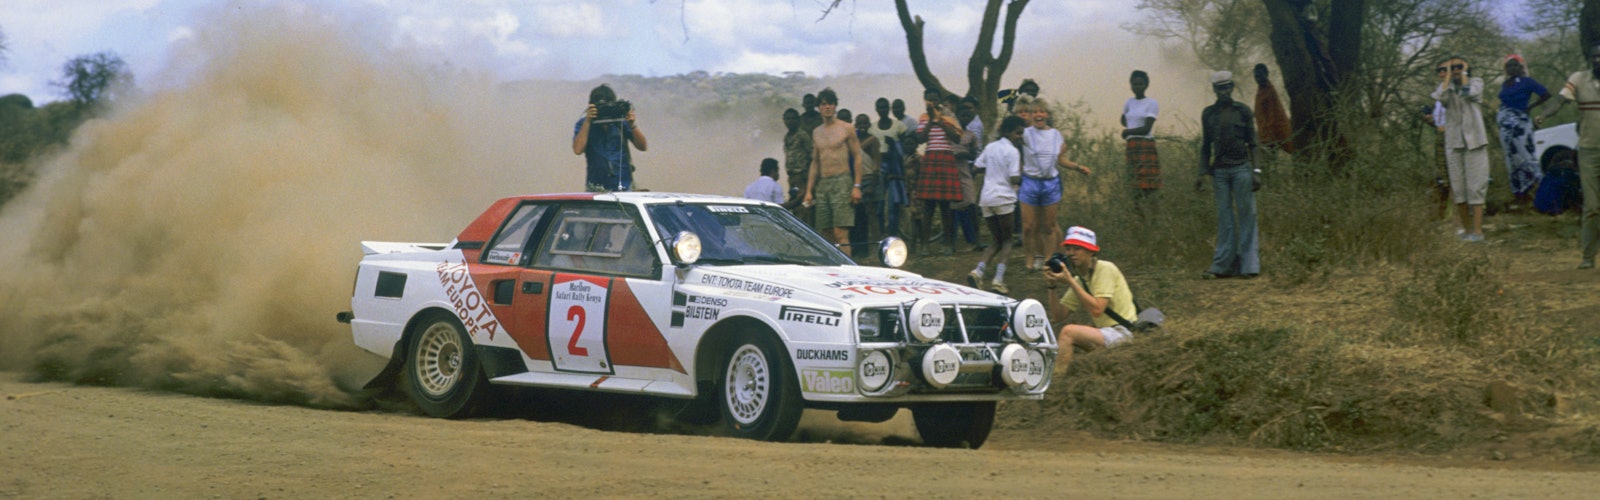 1986 Safari Rallycopyright:Mcklein